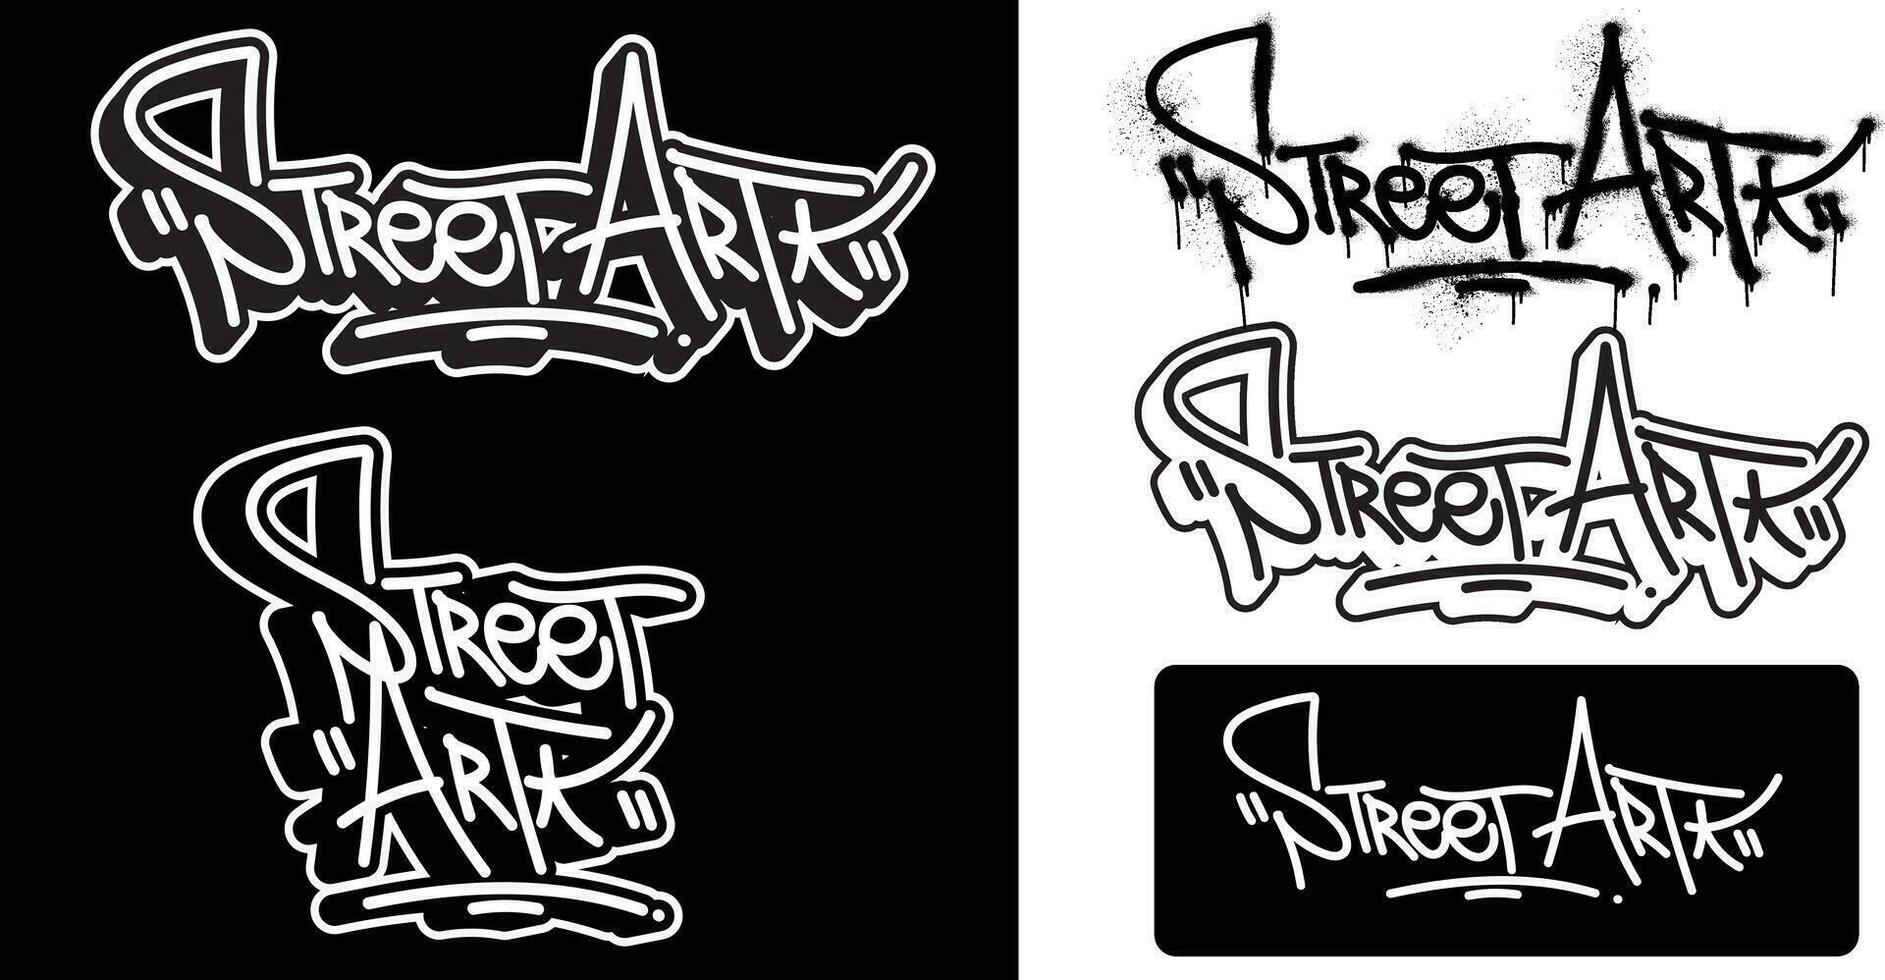 urban gata konst hiphop graffiti mönster. streetwear typografi vektor illustrationer.